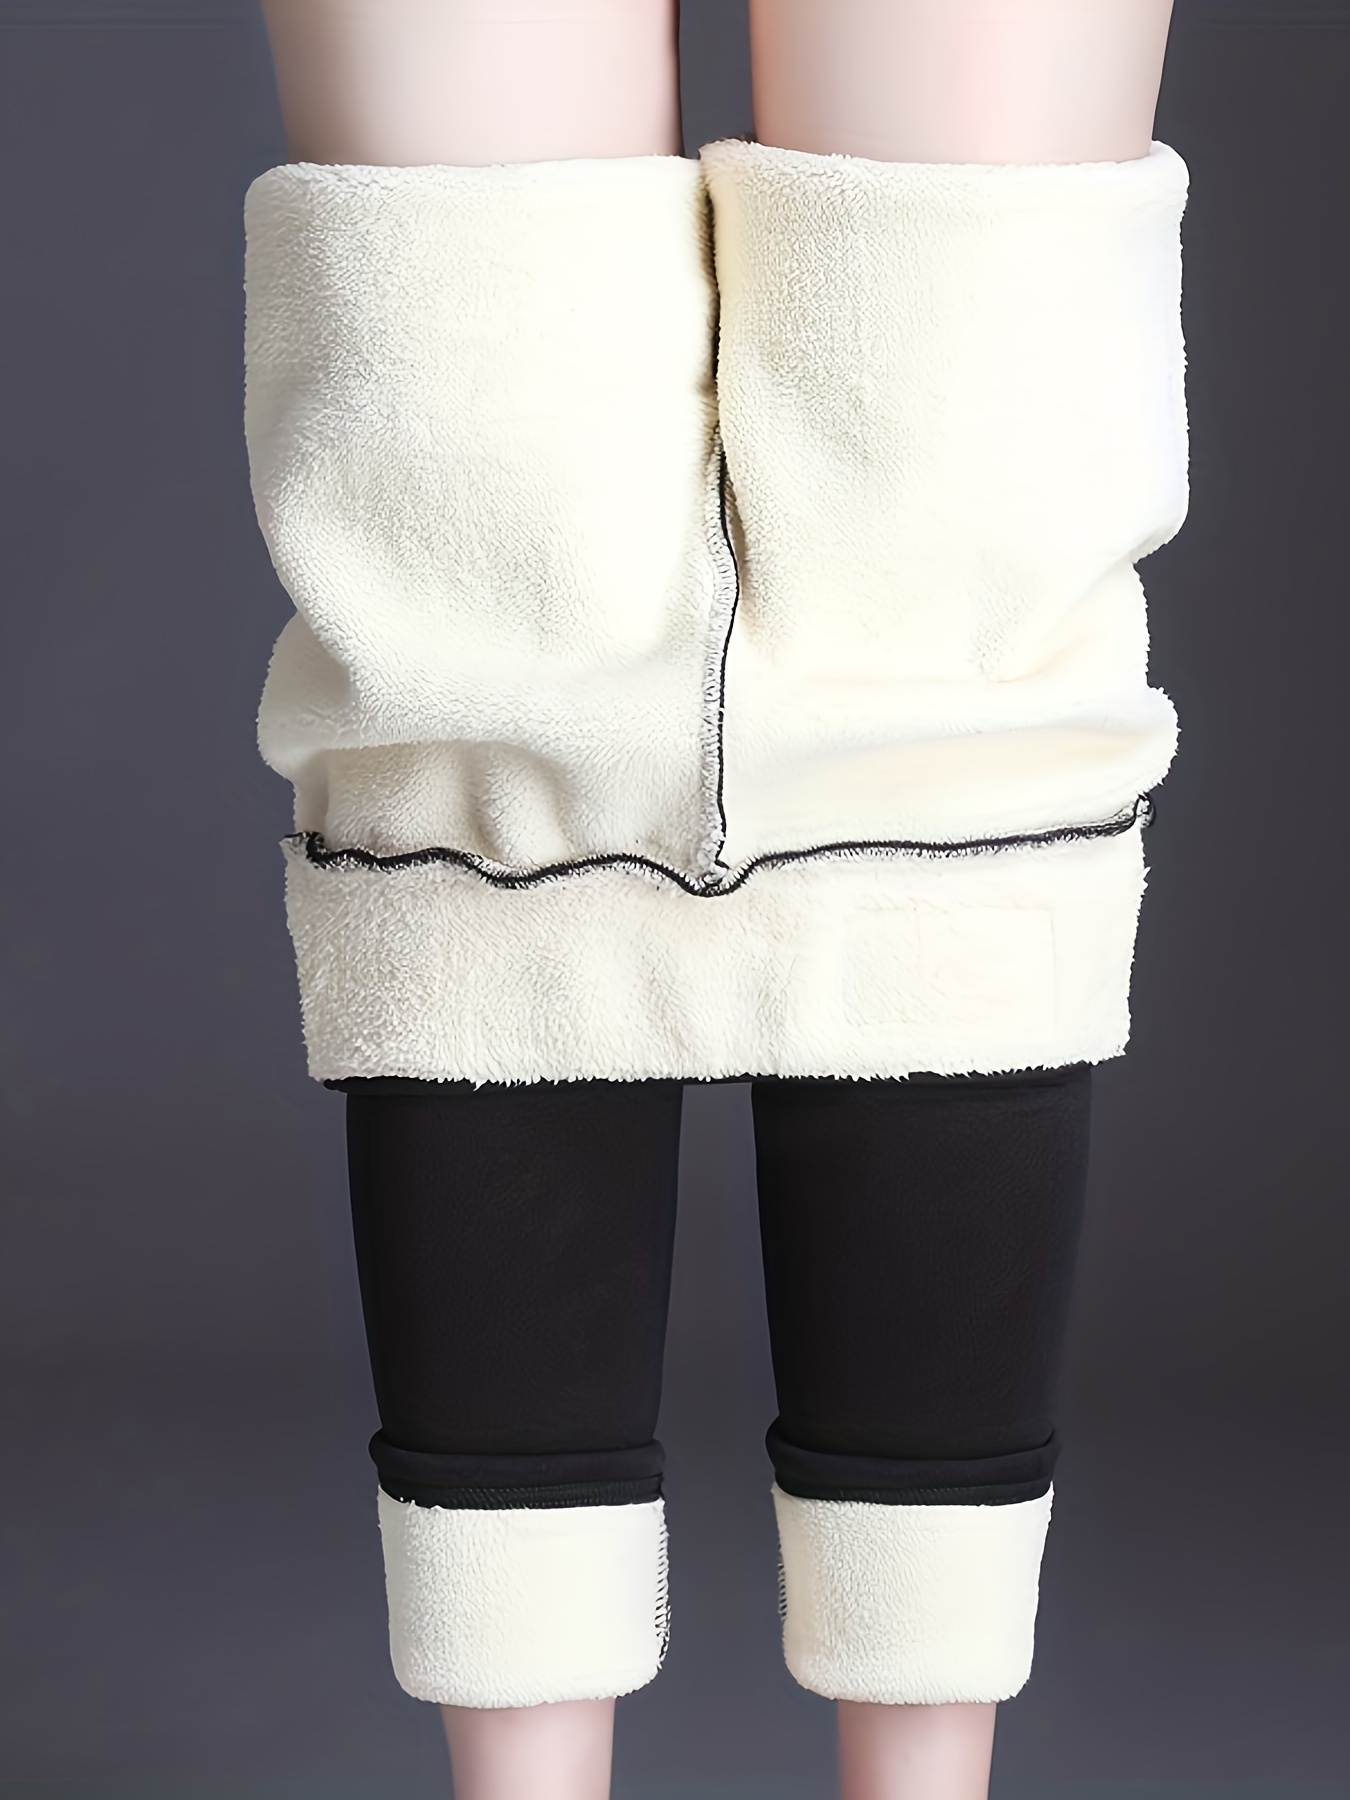 Yuneek Womsns/Girls Winter Warm Fleece Leggings Pants Thigh HIgh